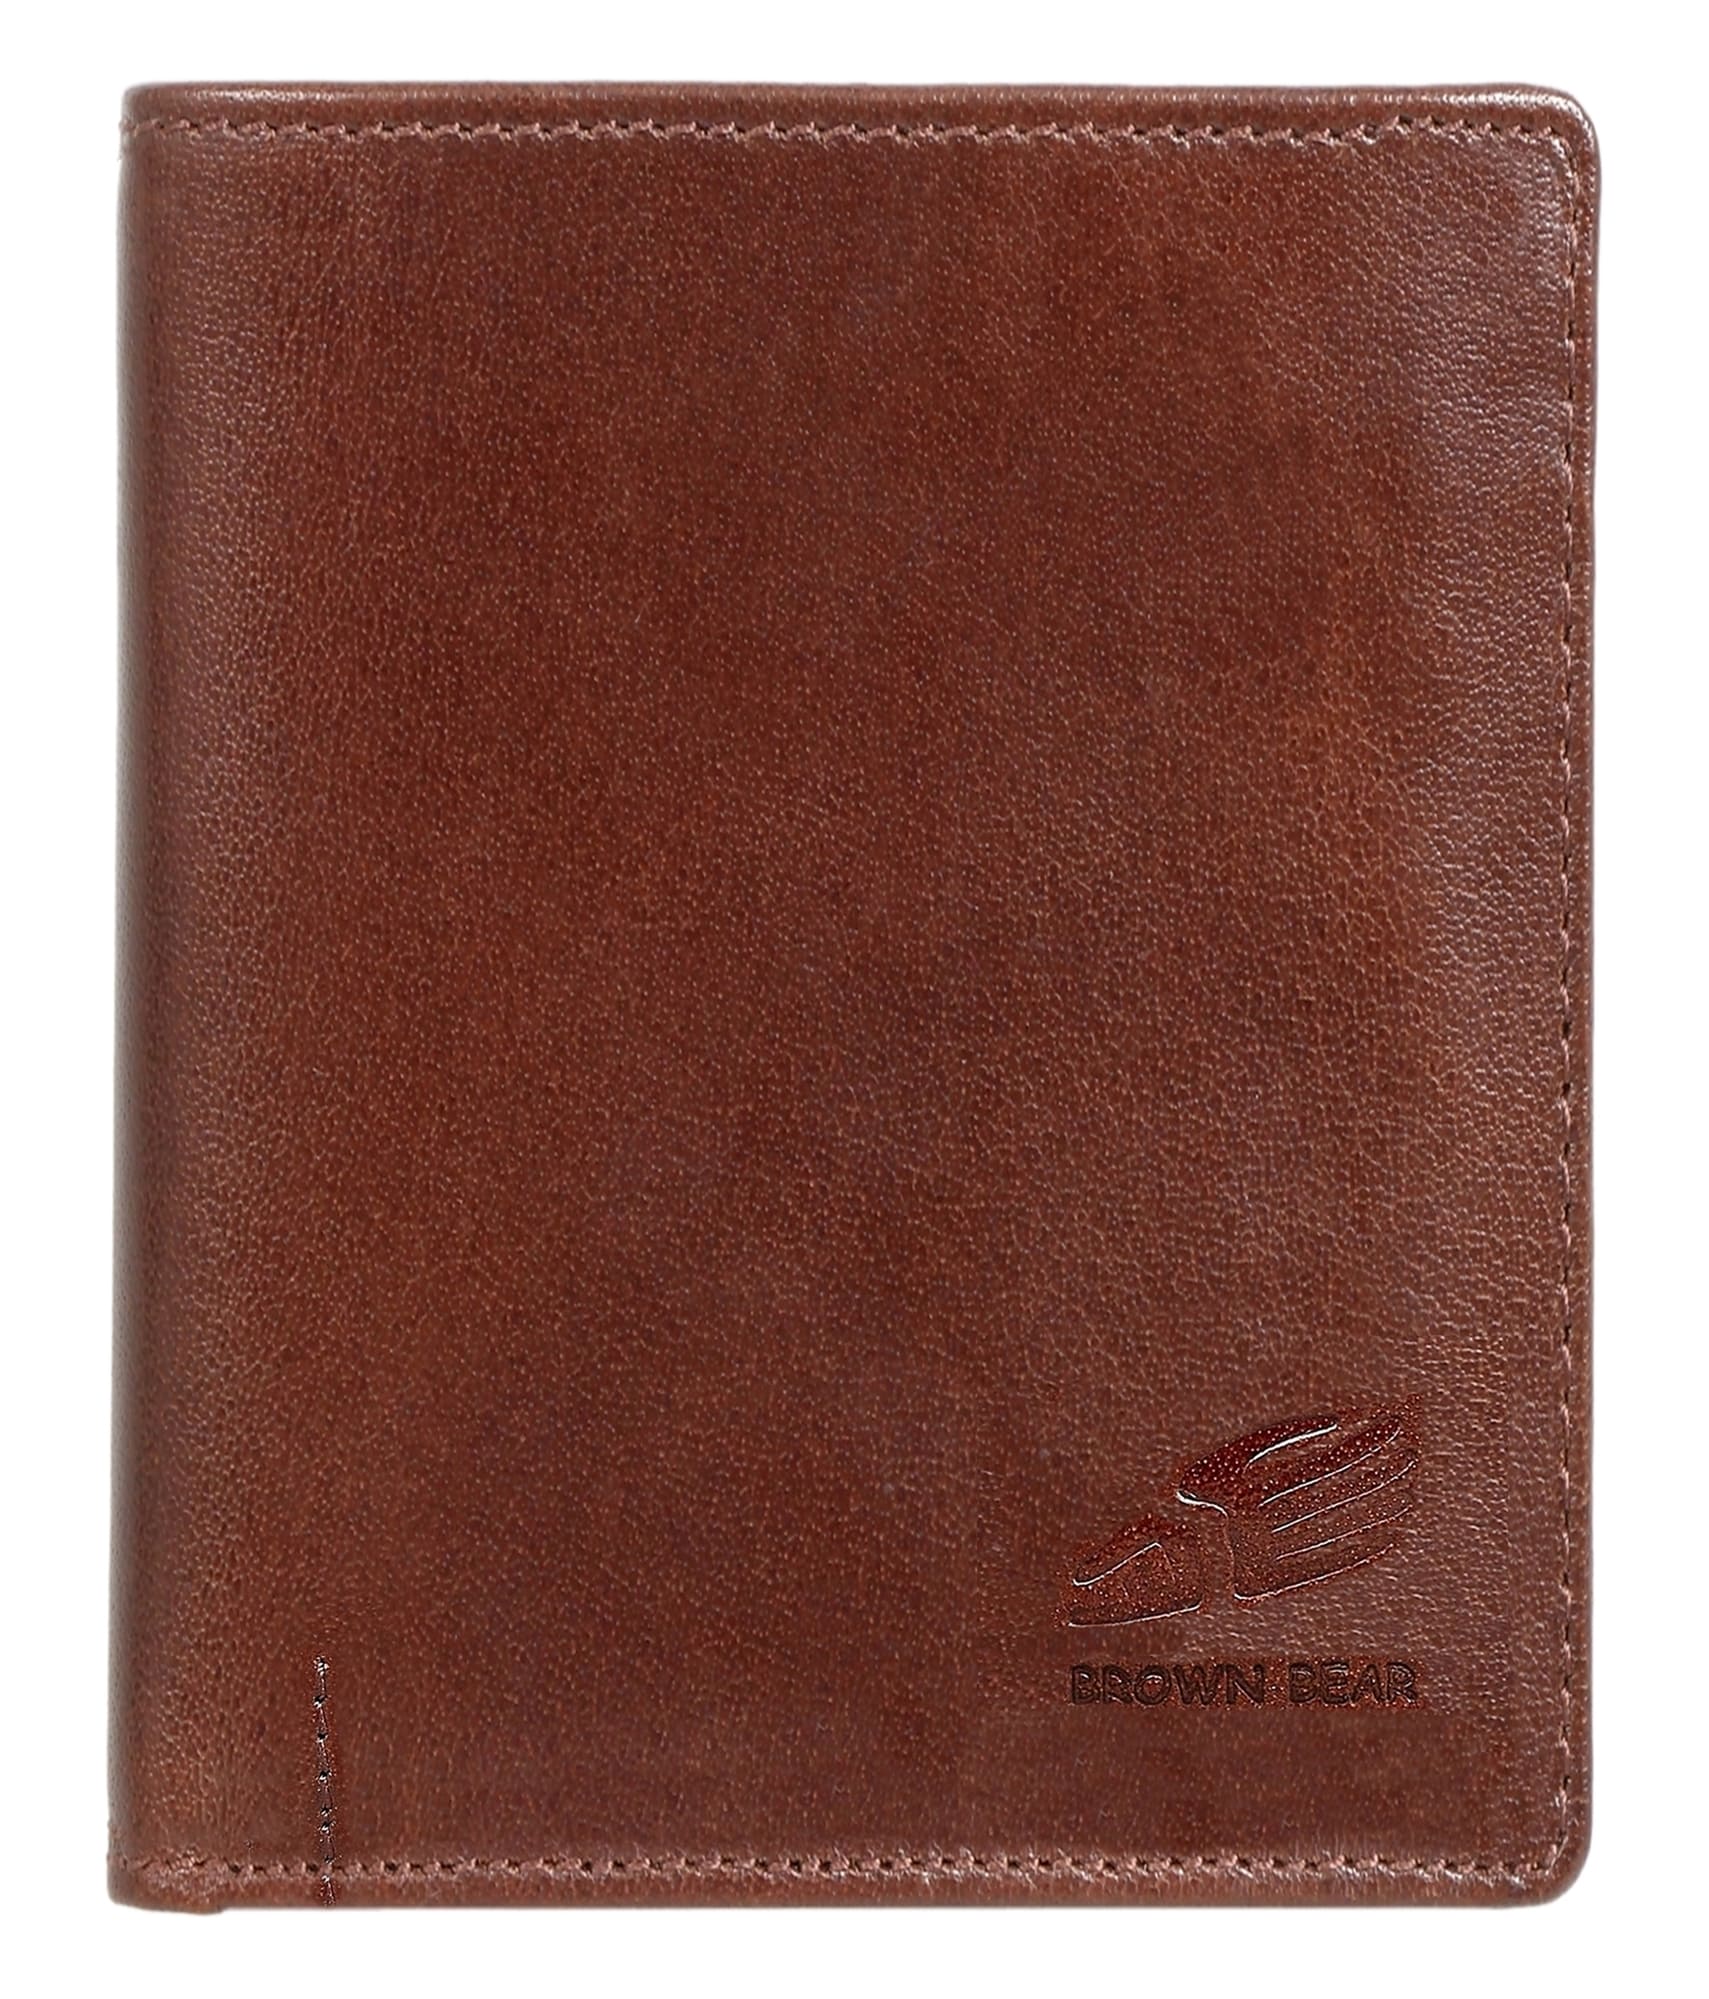 Brown Bear IBP 2051 - Hochformat Geldbörse Braun